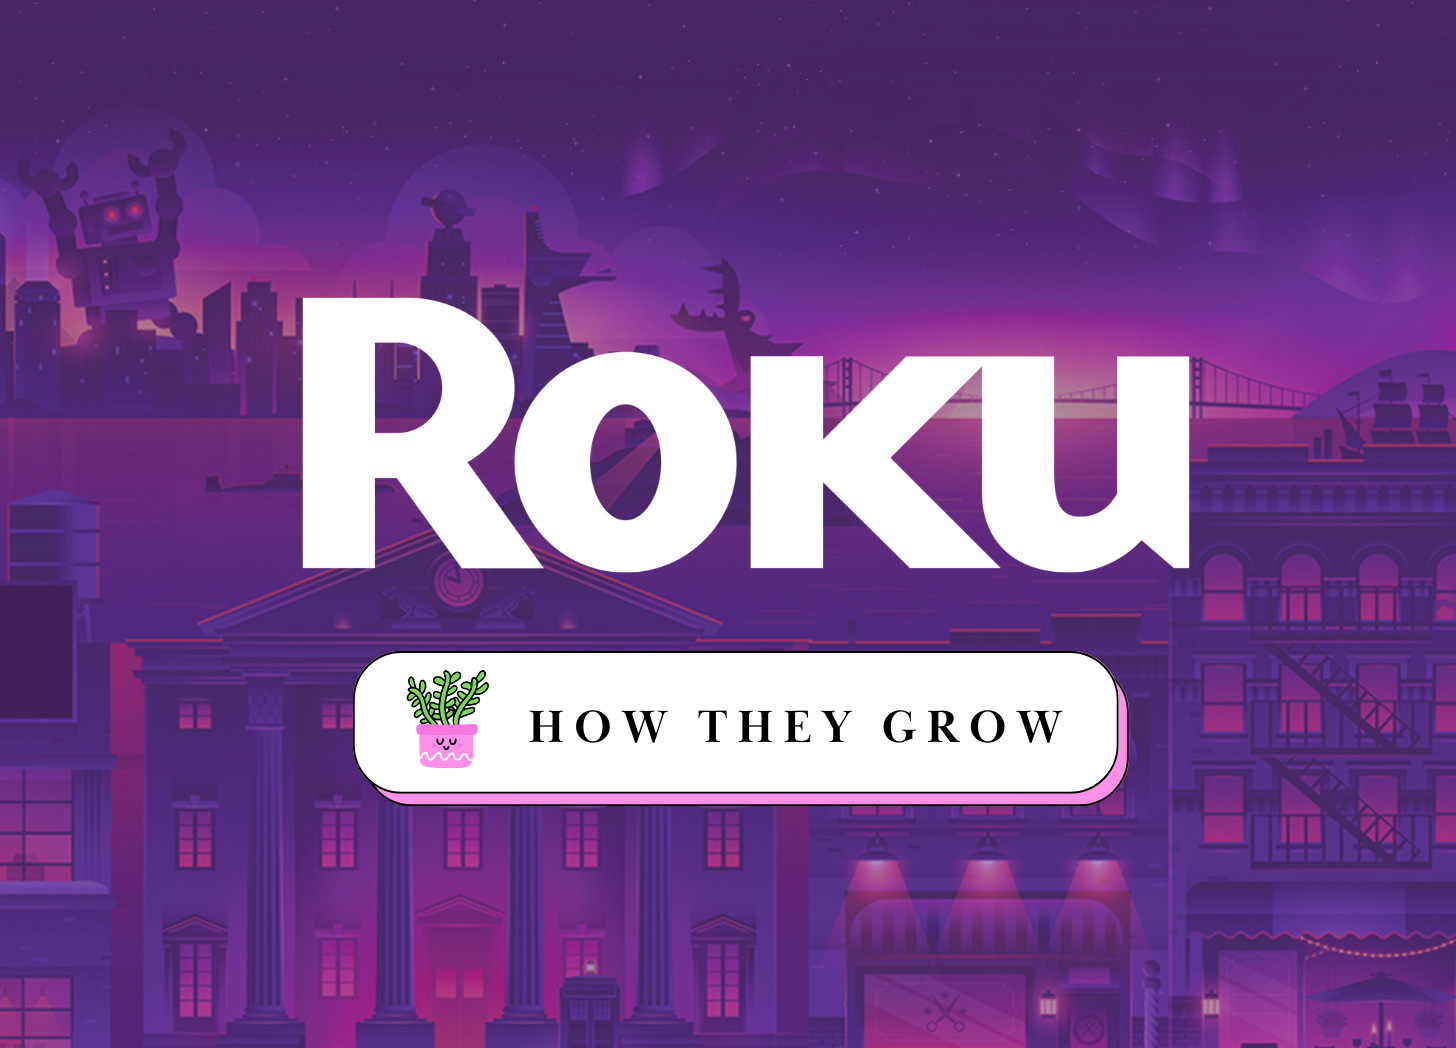 How Roku Grows